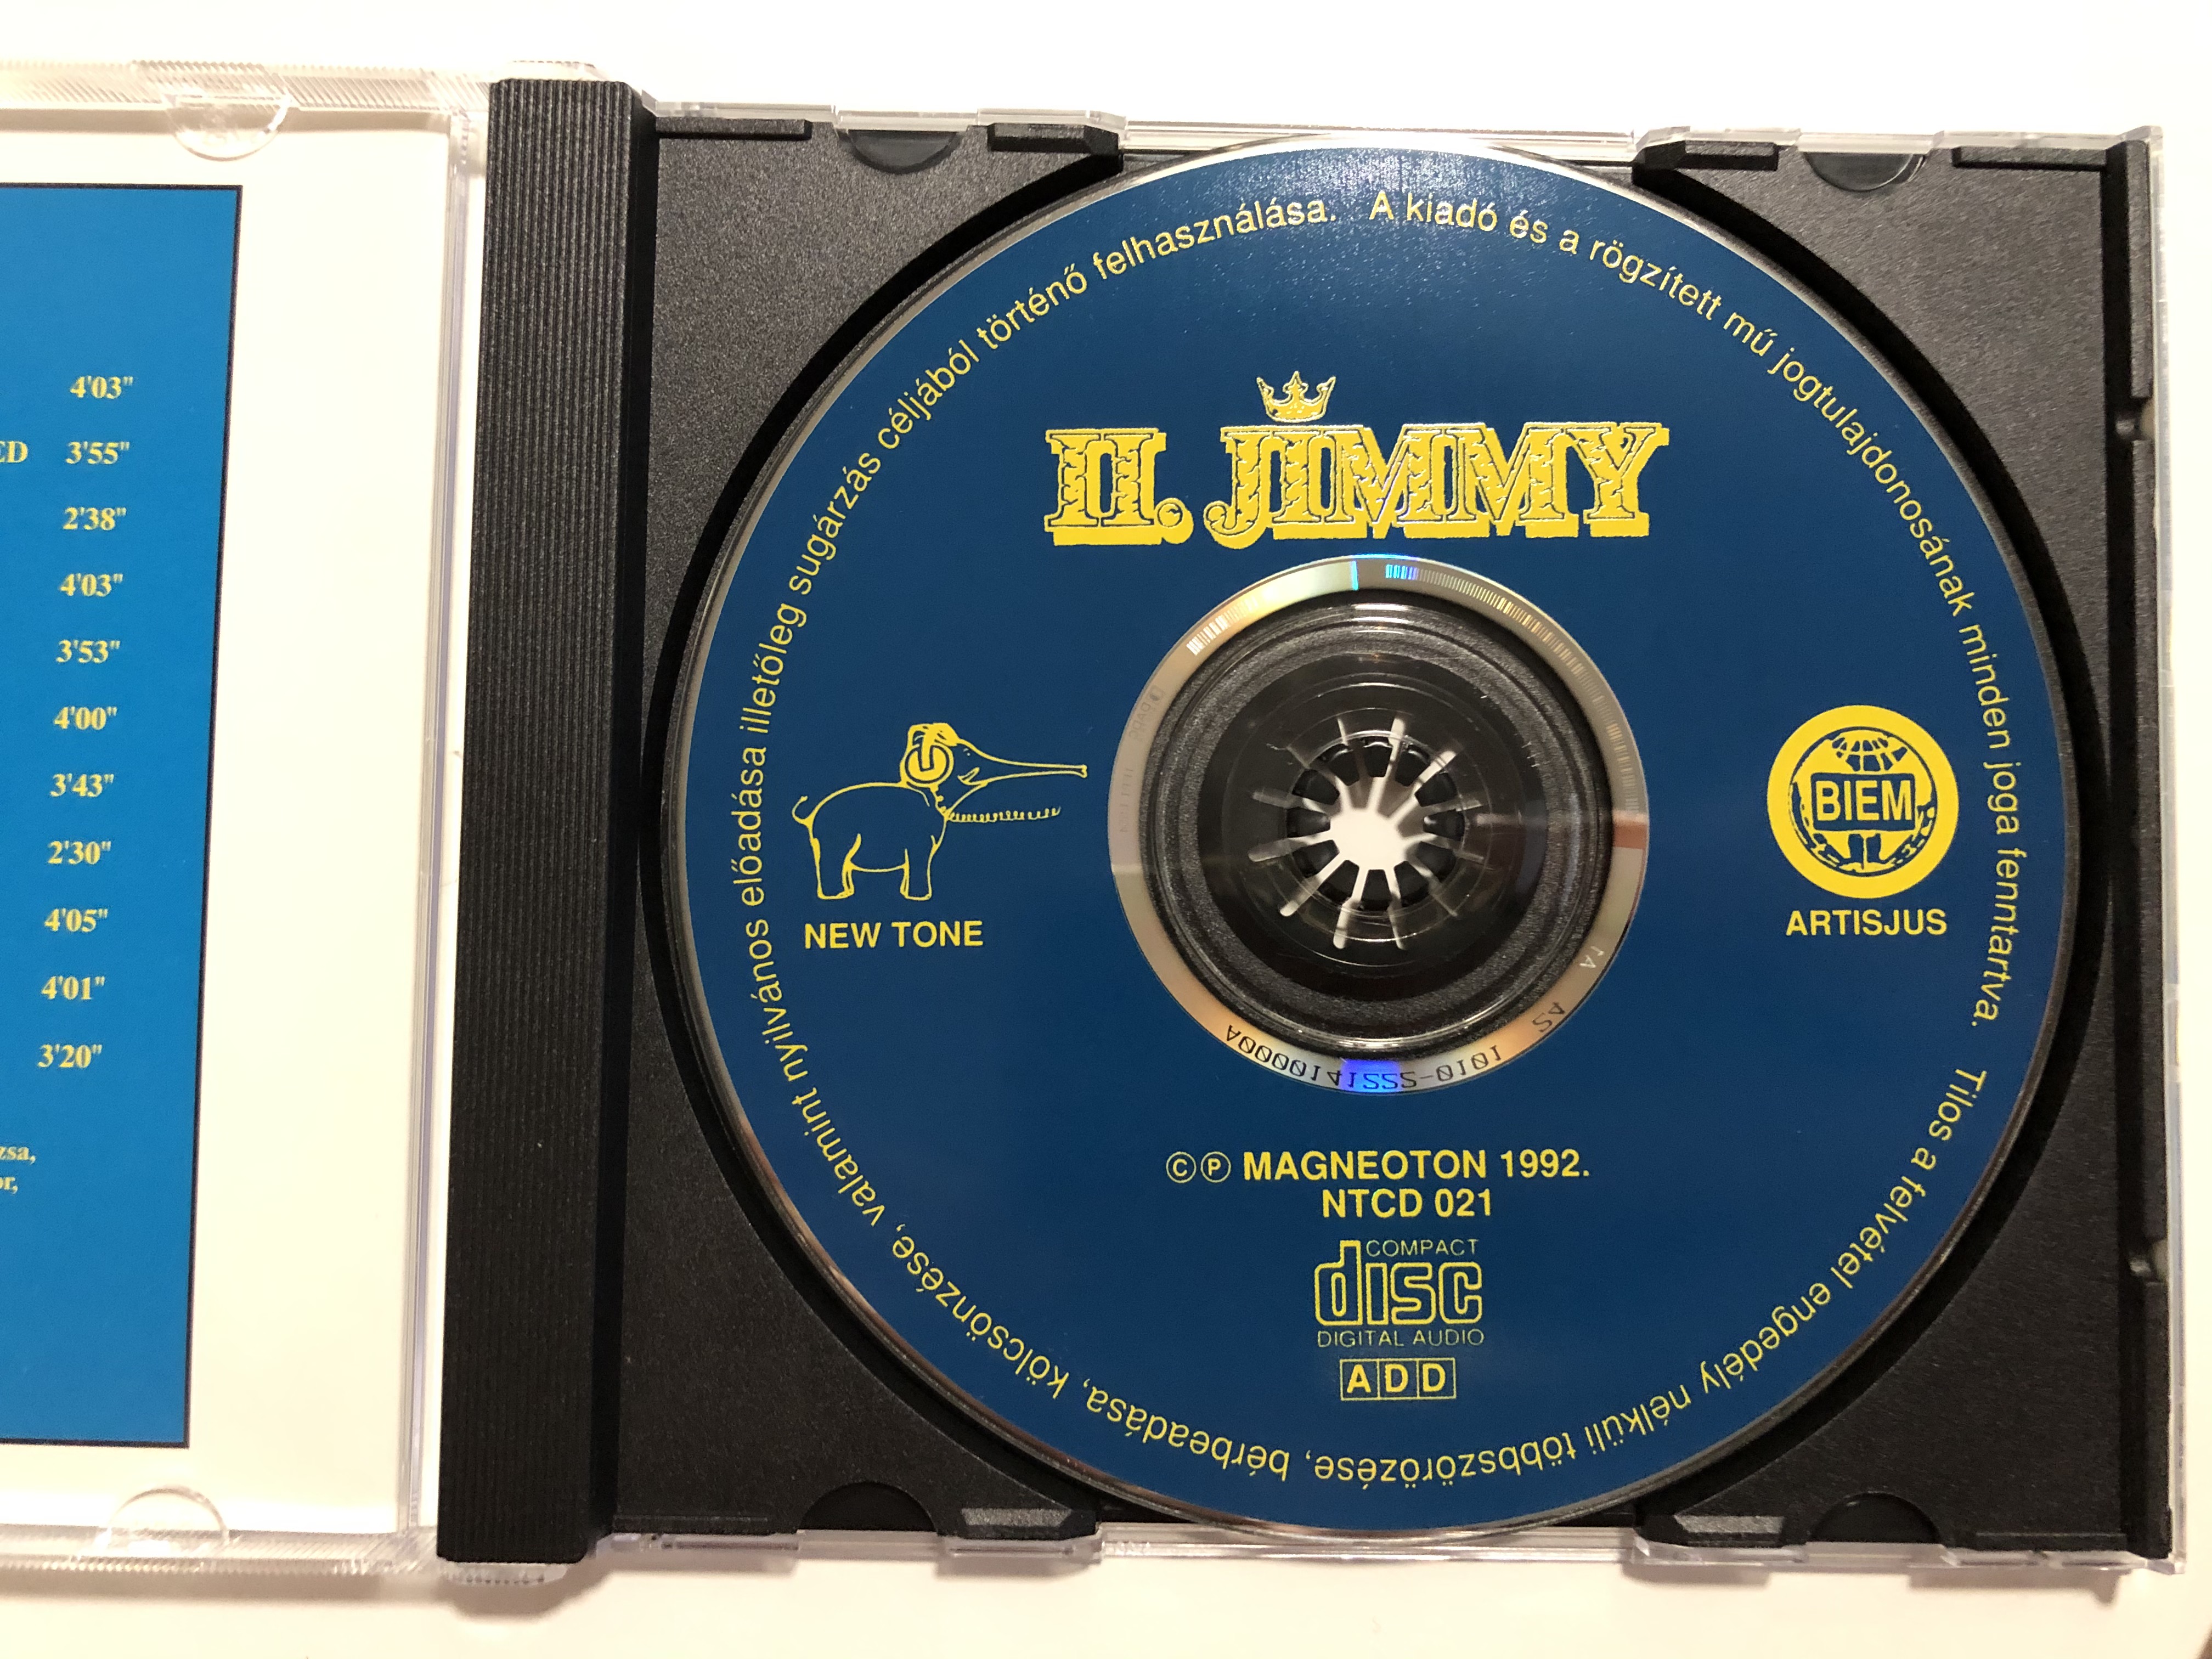 ii.-jimmy-new-tone-audio-cd-1992-ntcd-021-3-.jpg